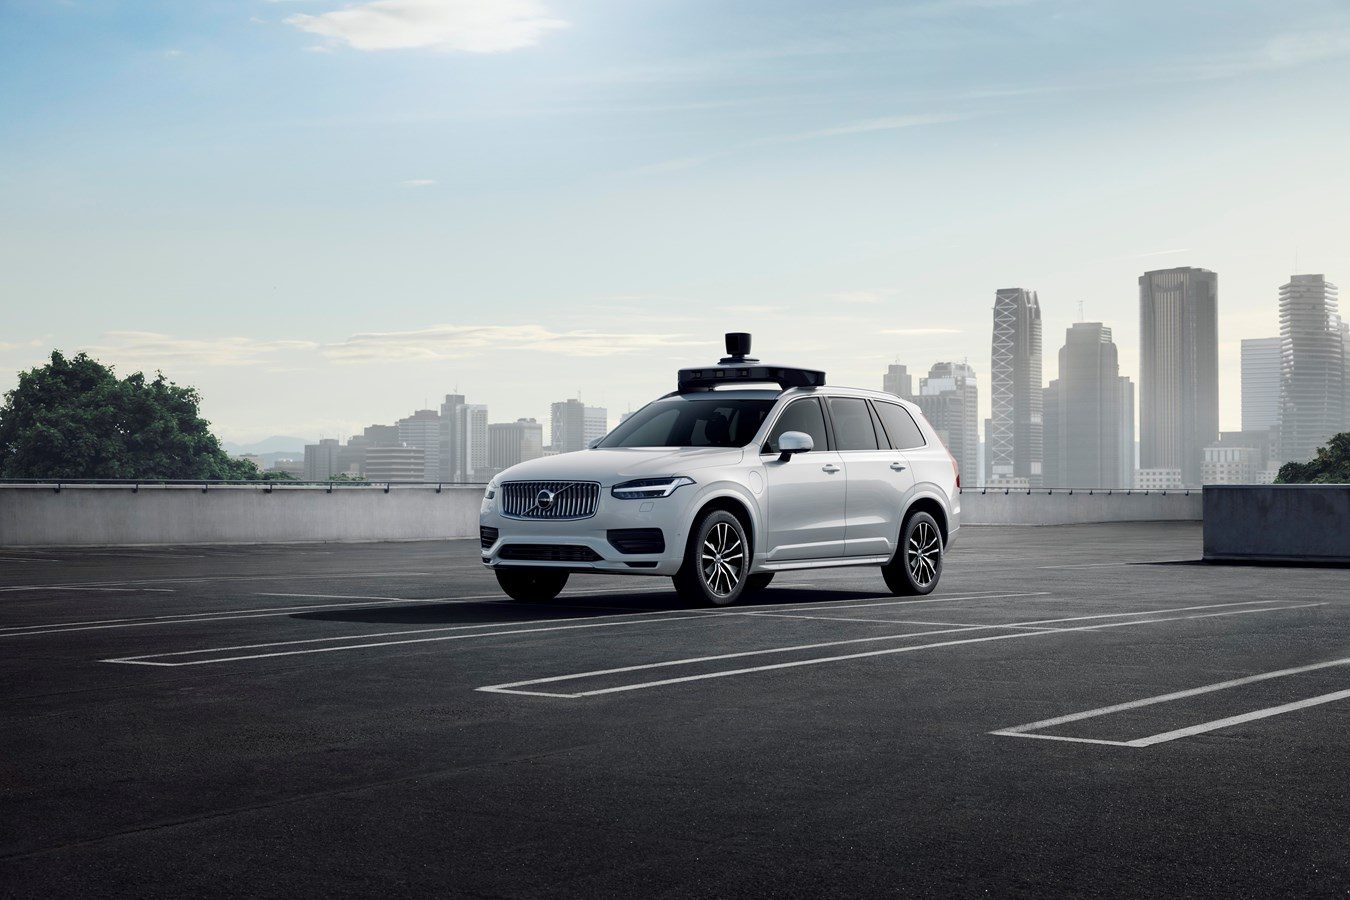 Uber eyes drones for food delivery, unveils new autonomous car